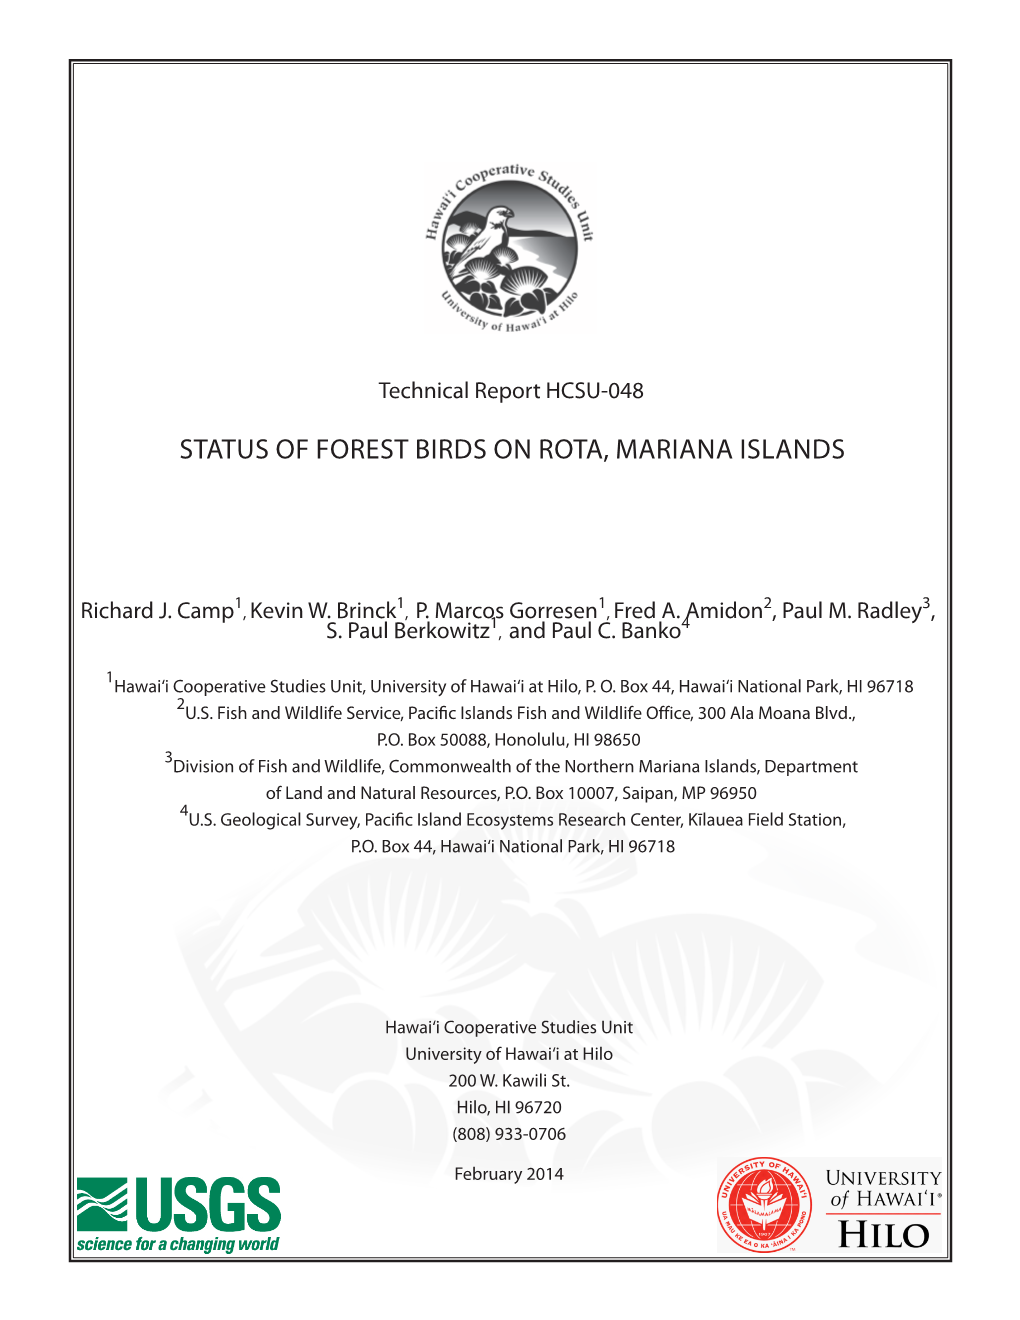 Status of Forest Birds on Rota, Mariana Islands